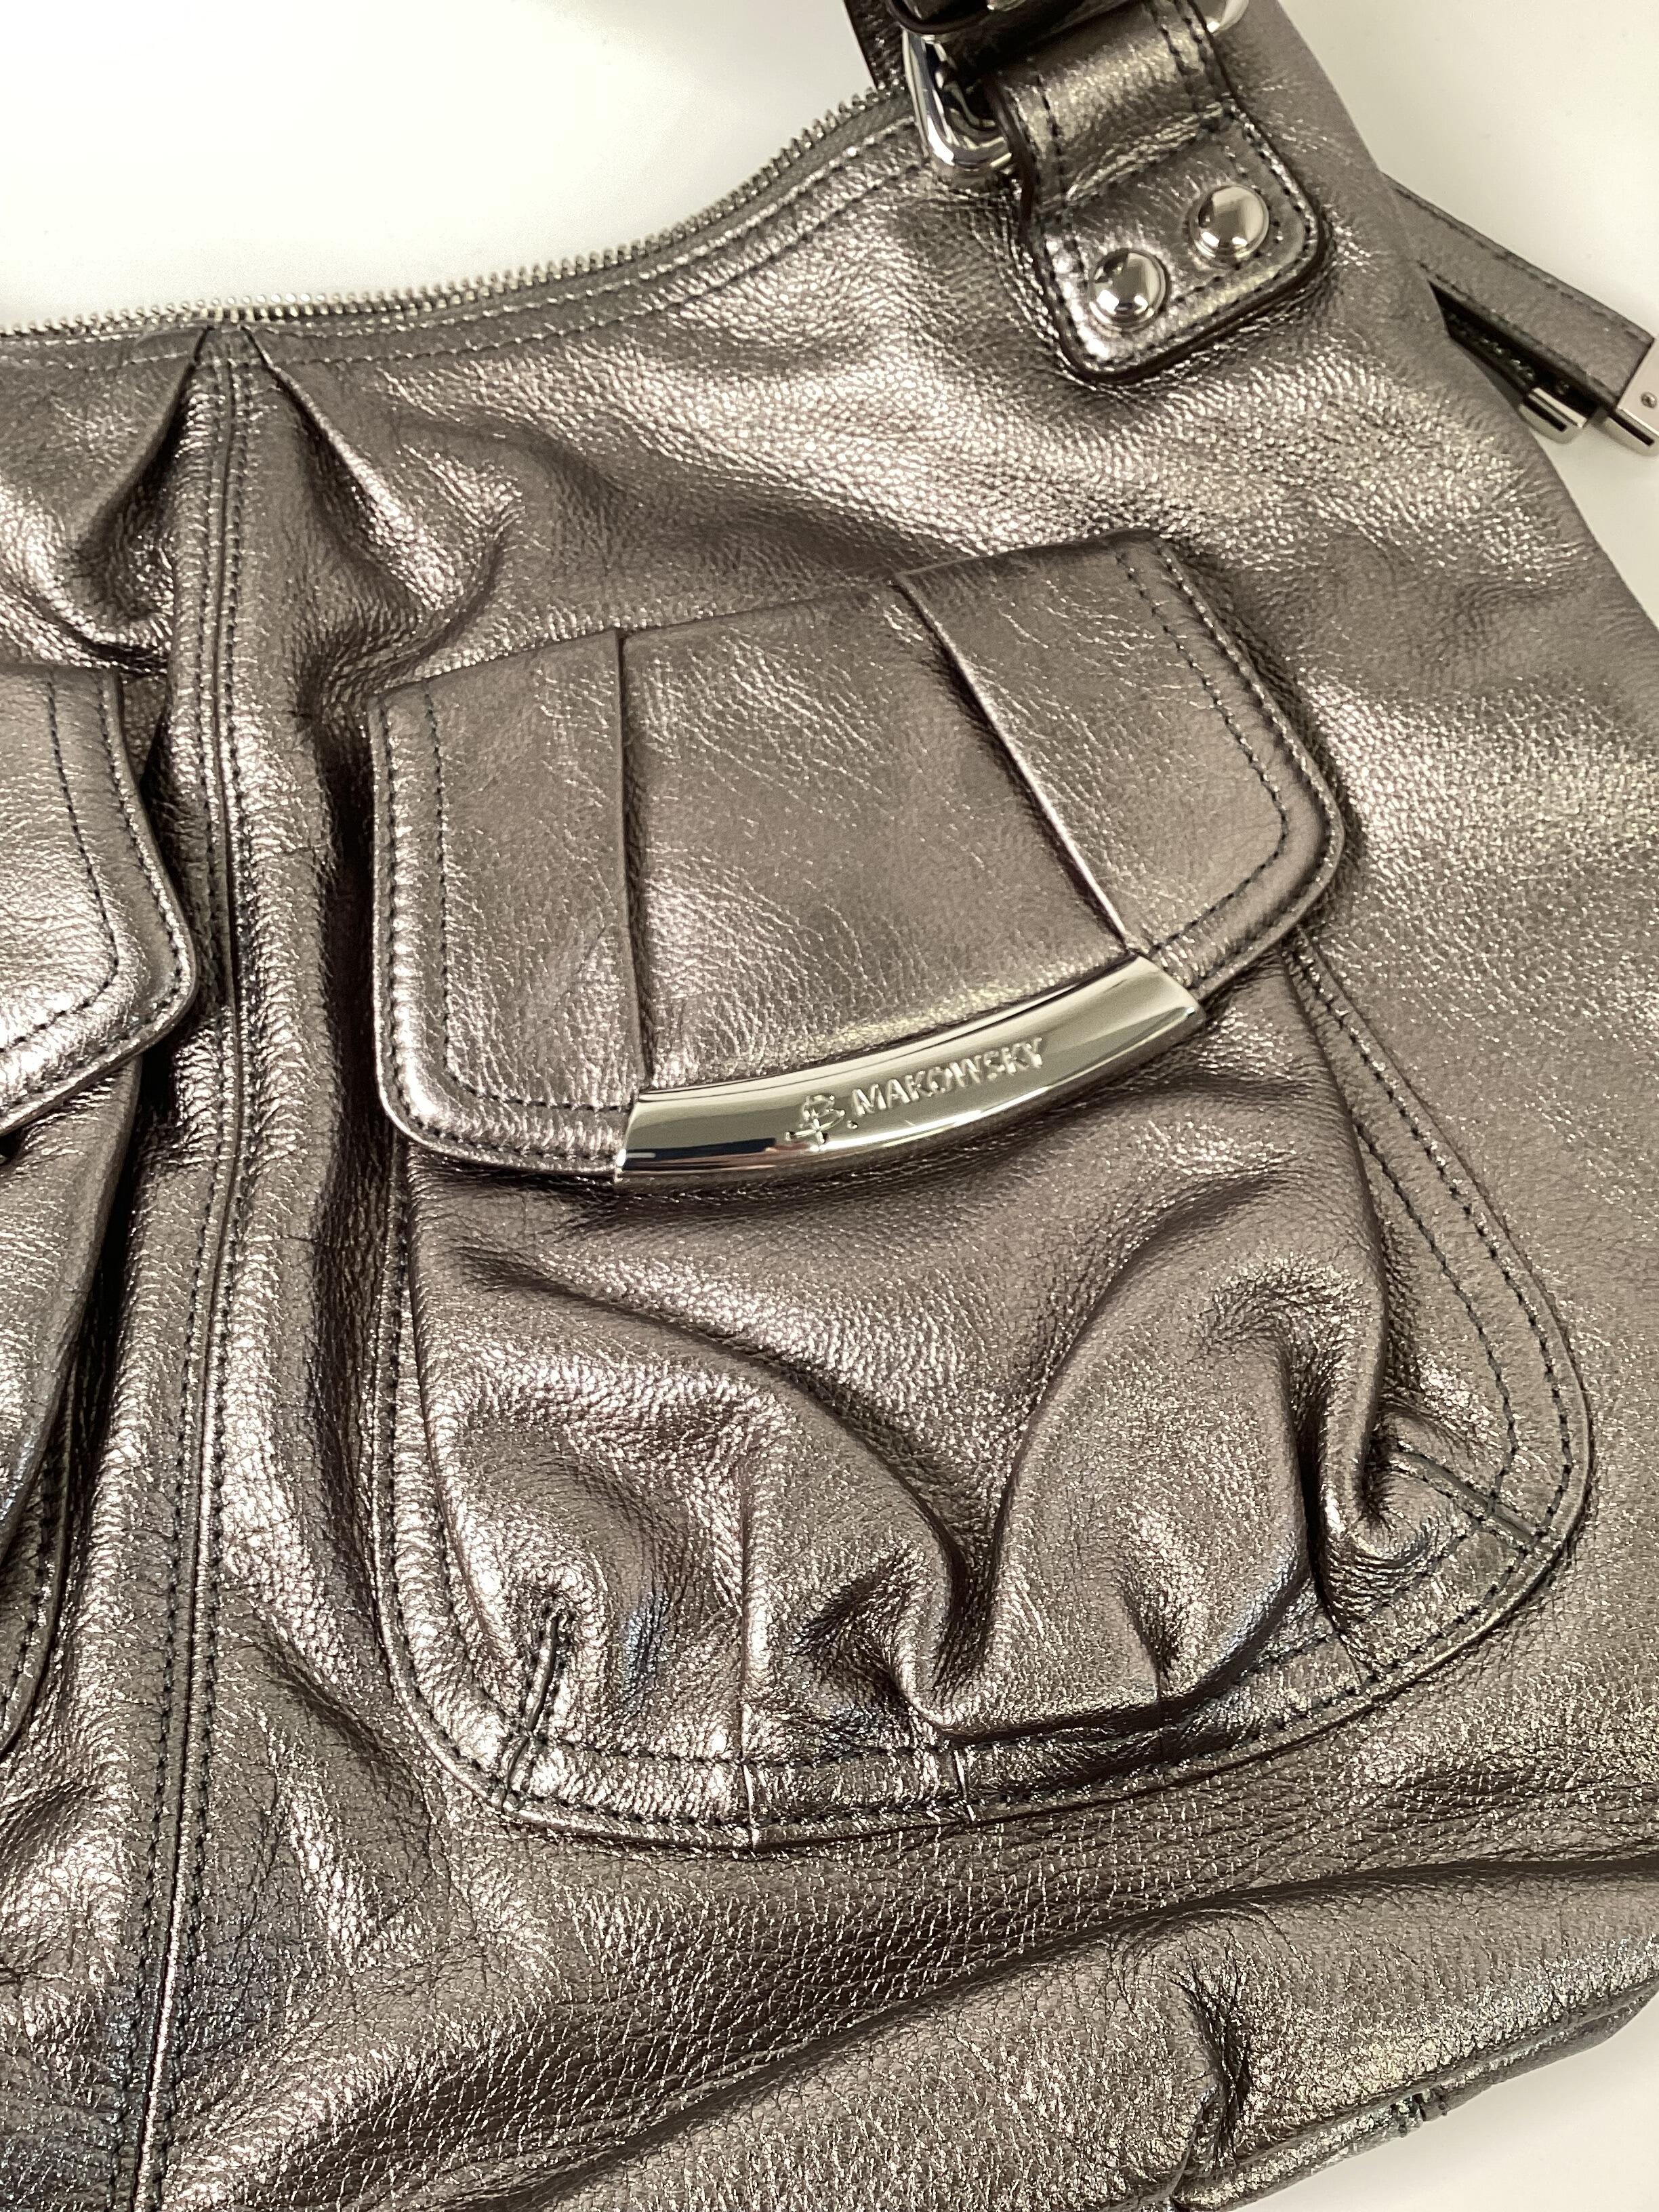 ♻️ B. MAKOWSKY Genuine Leather Braided Handle Tote - Women's handbags